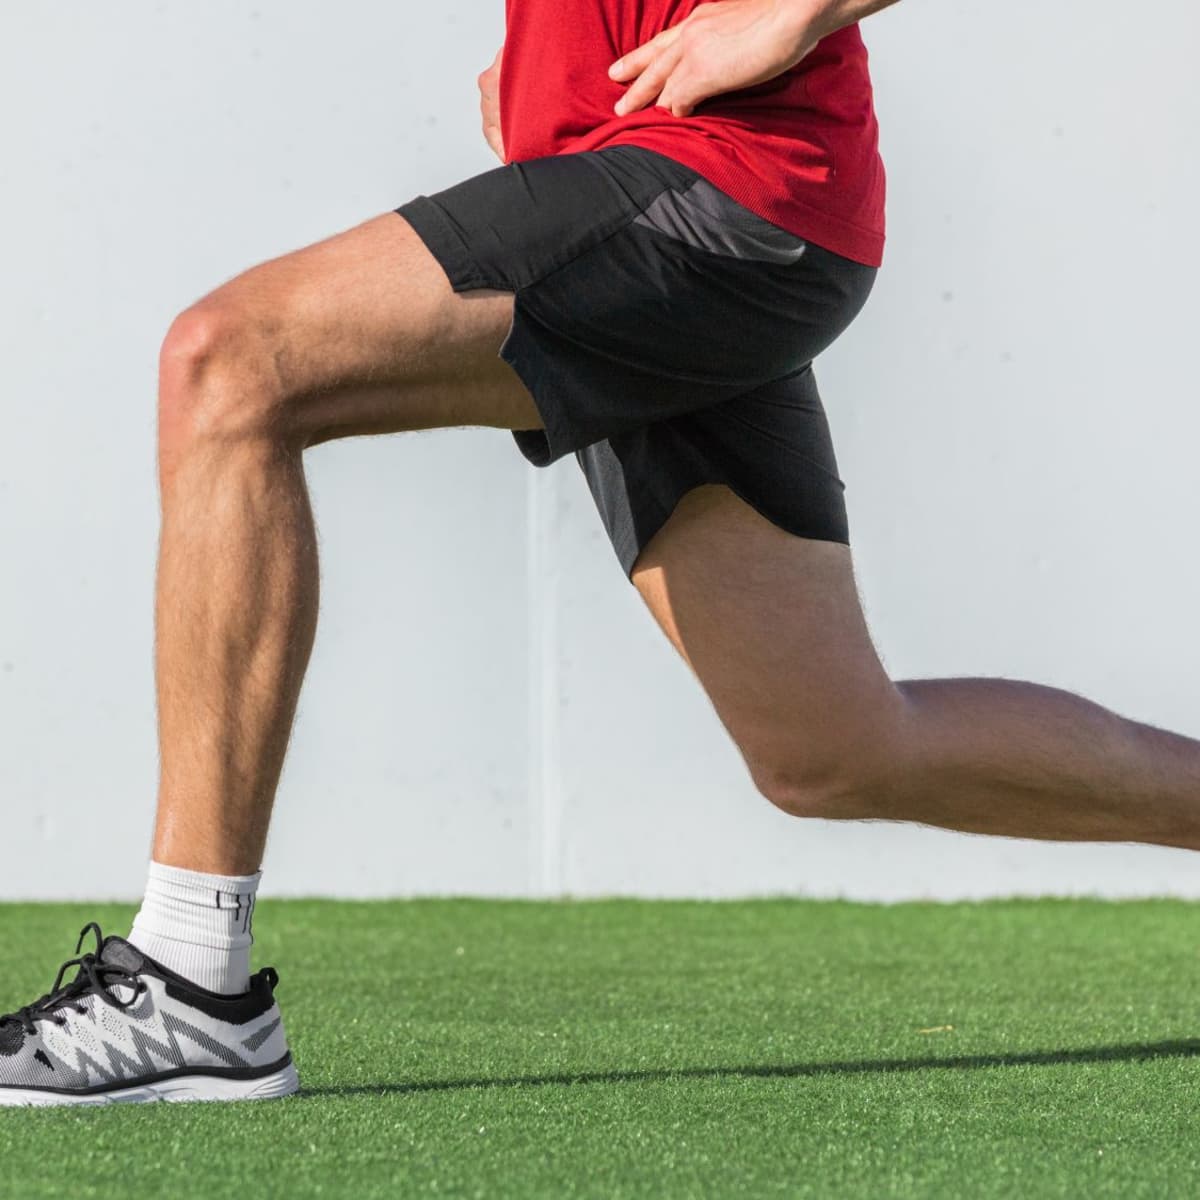 Low-Impact Leg Lift Workout & Exercises That Protect Knees